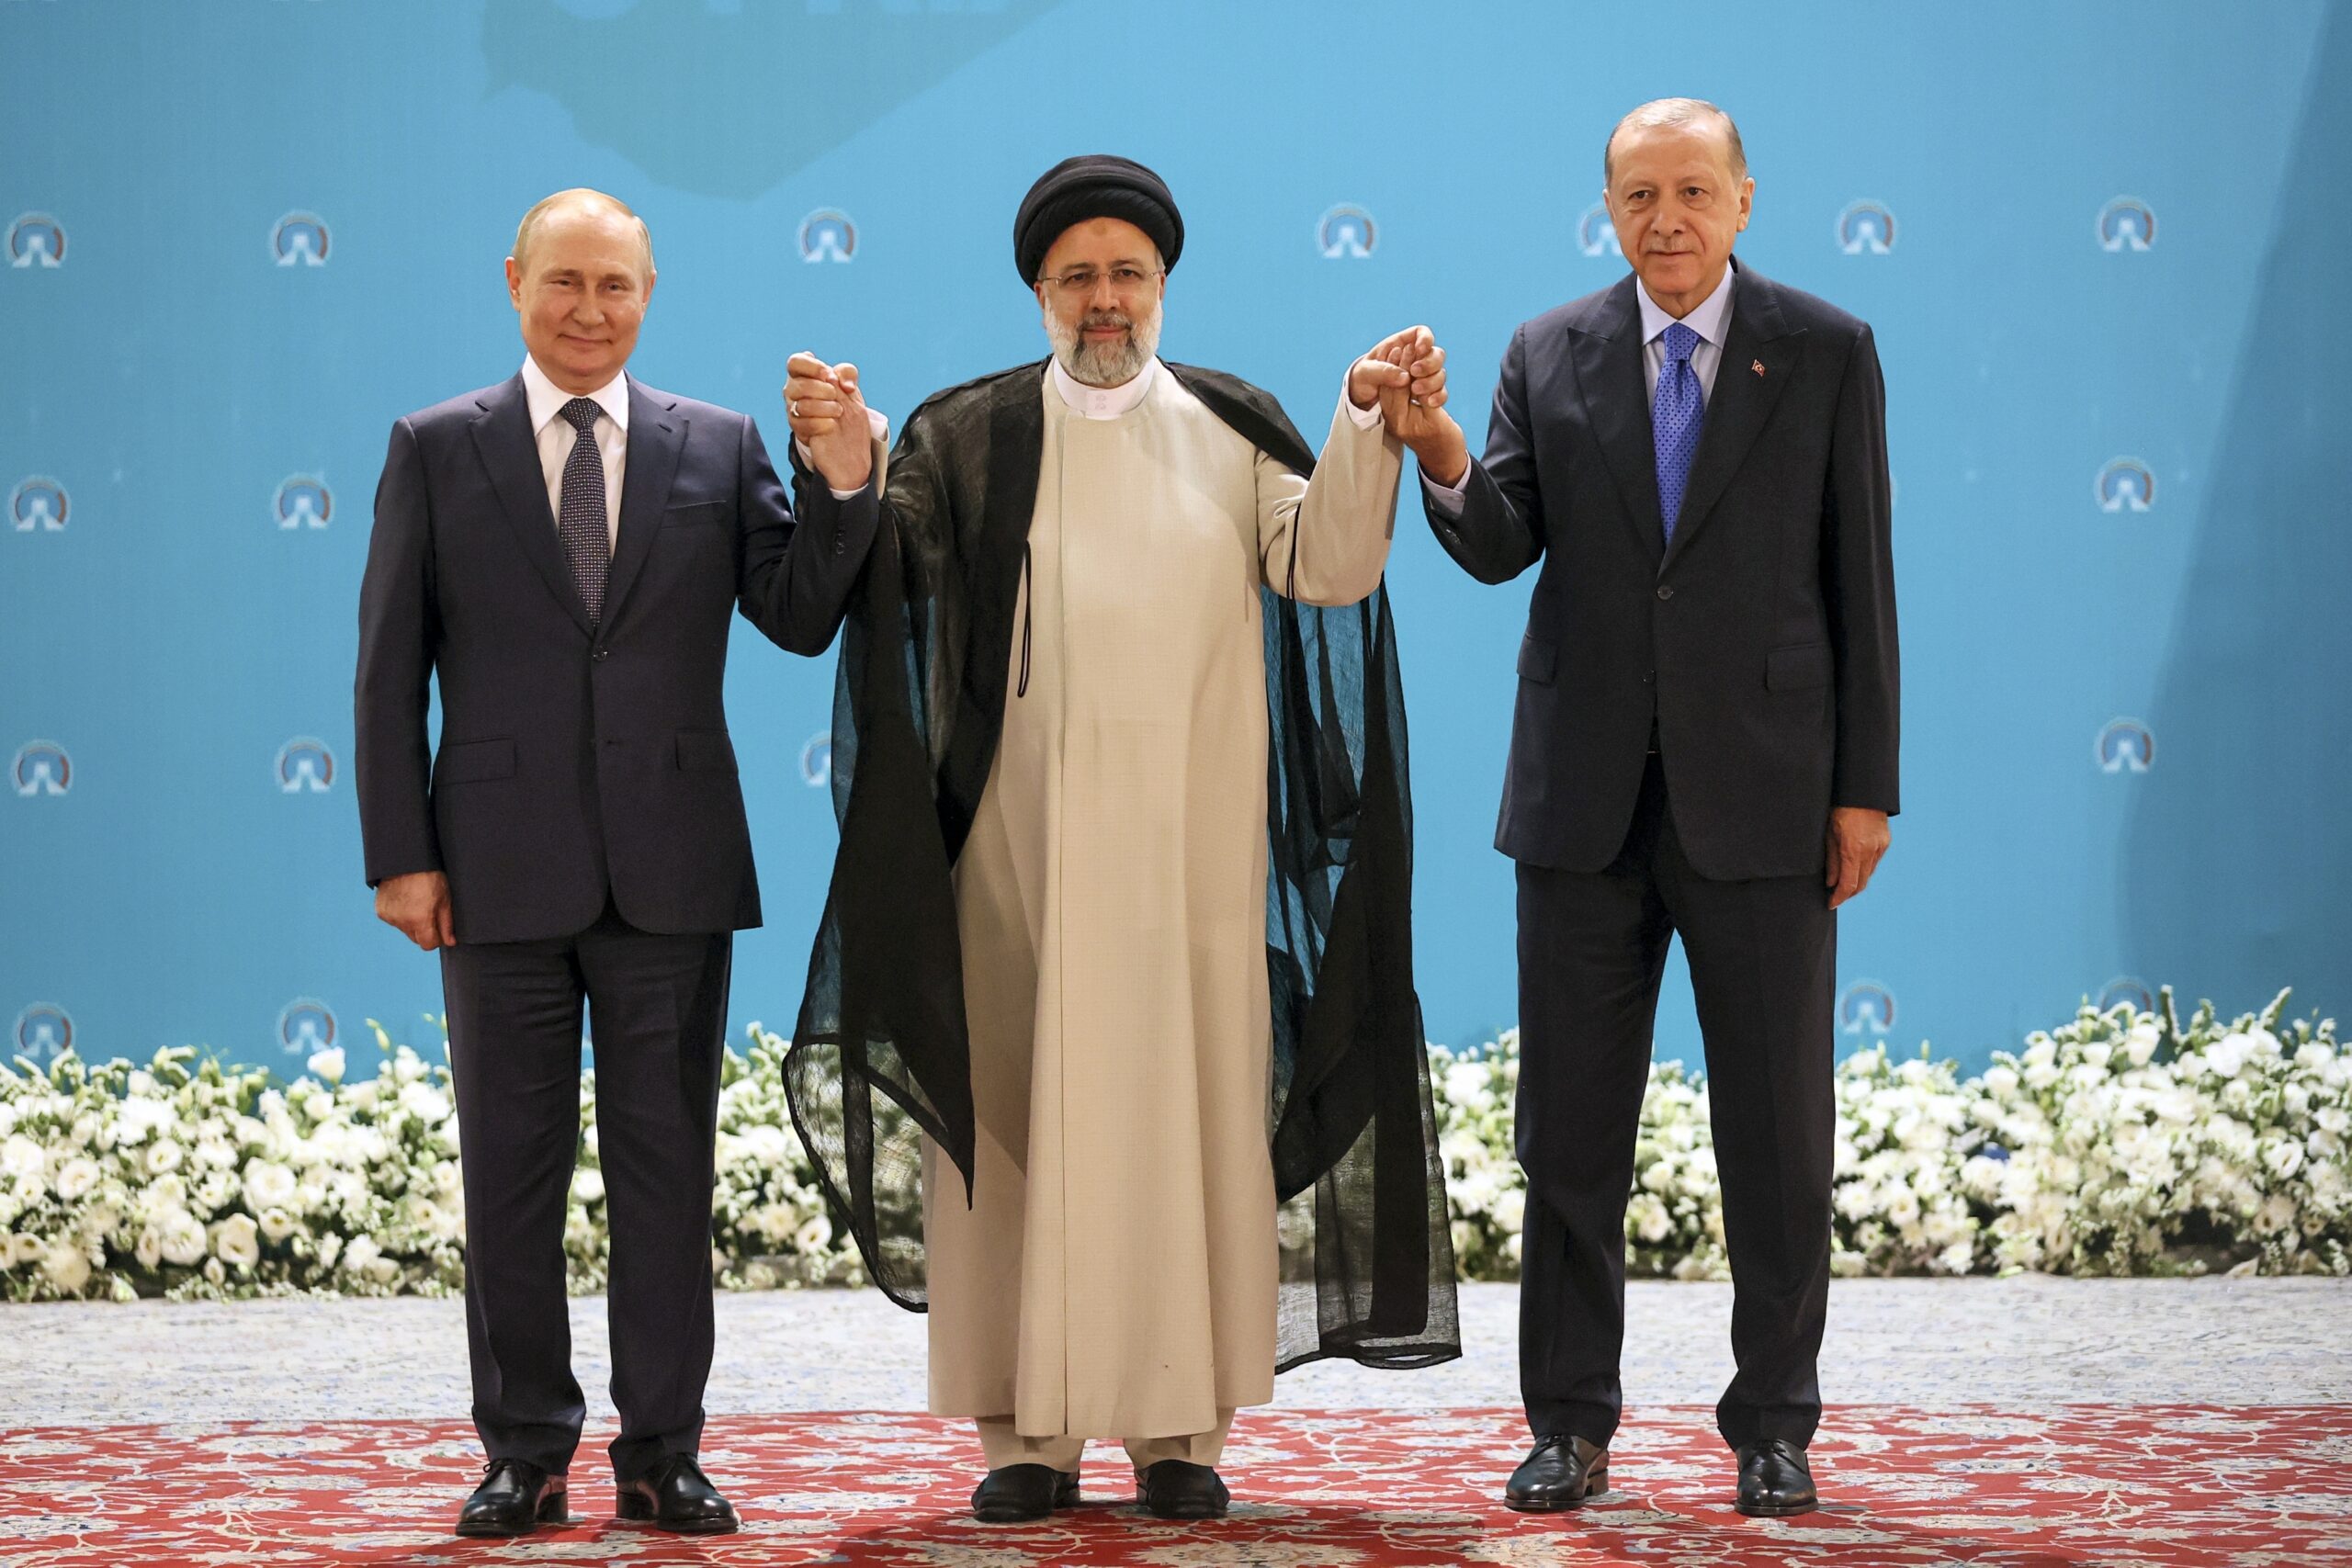 Gipfeltreffen in Teheran